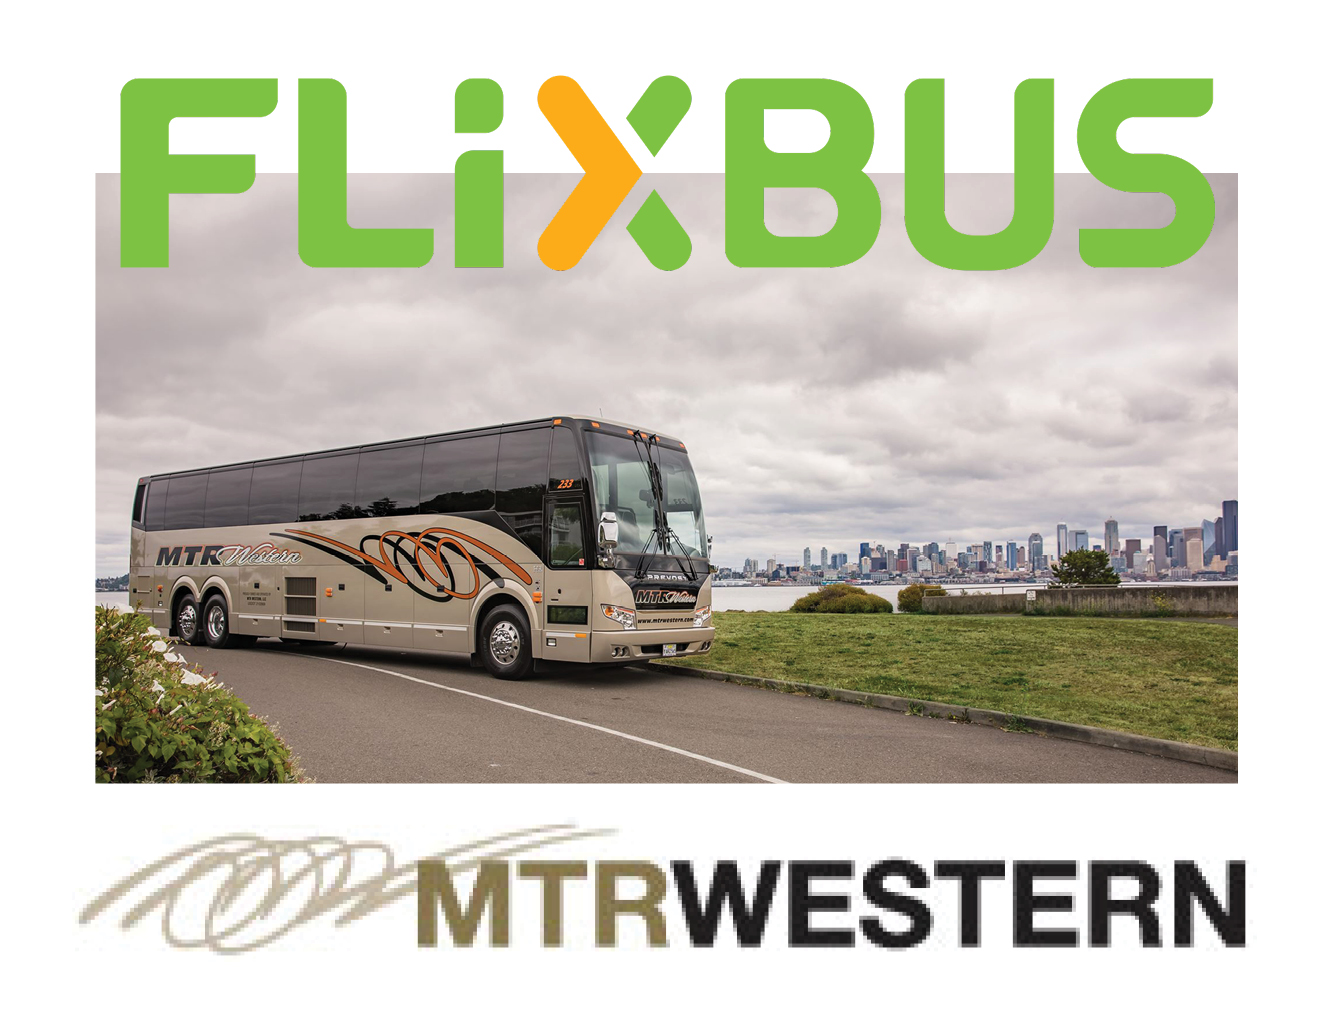 CH& Client MTRWestern Announces Partnership with FlixBus